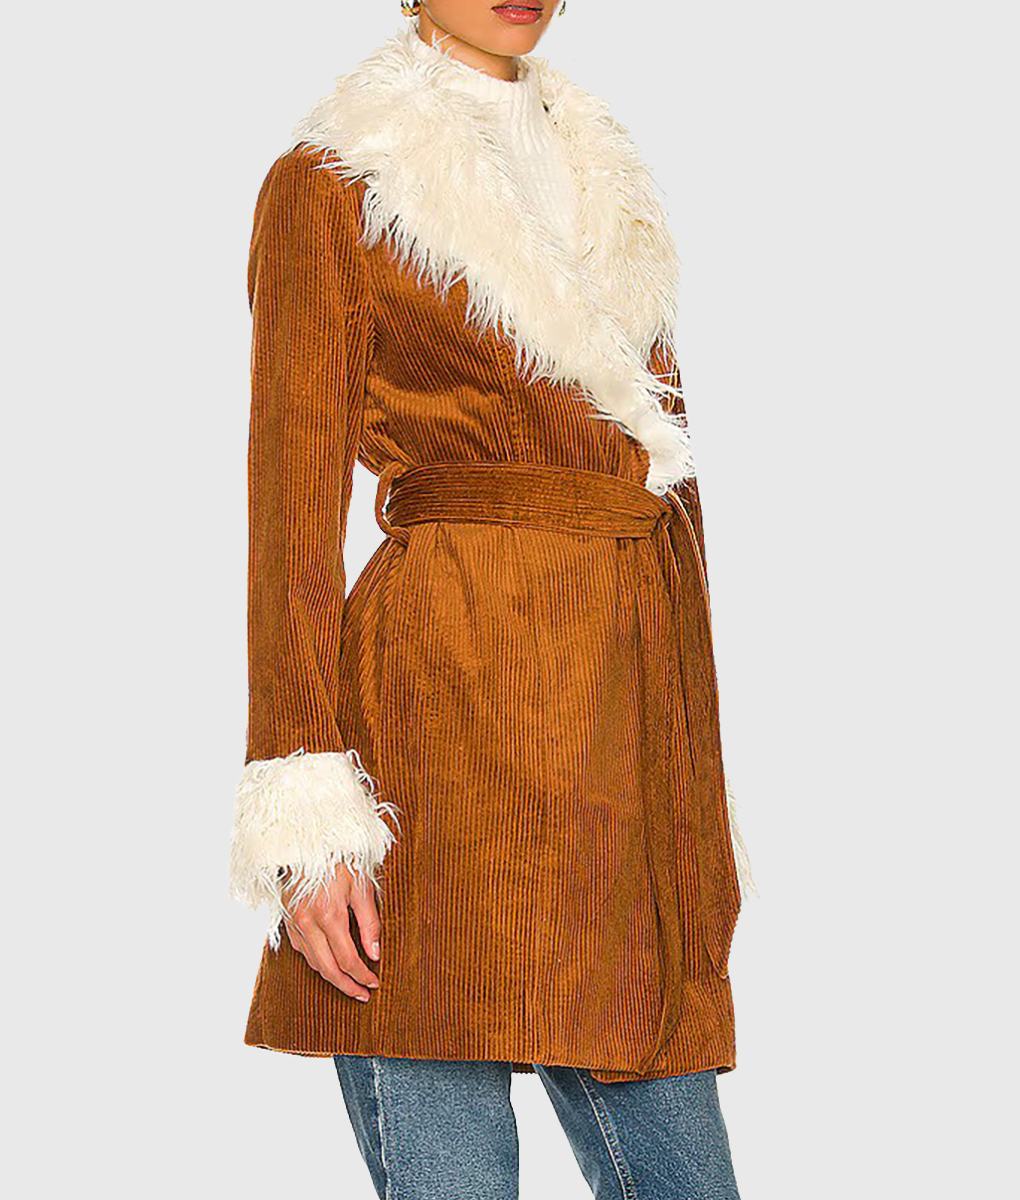 Nicola Coughlan Big Mood Suede Leather Brown Fur Coat (3)